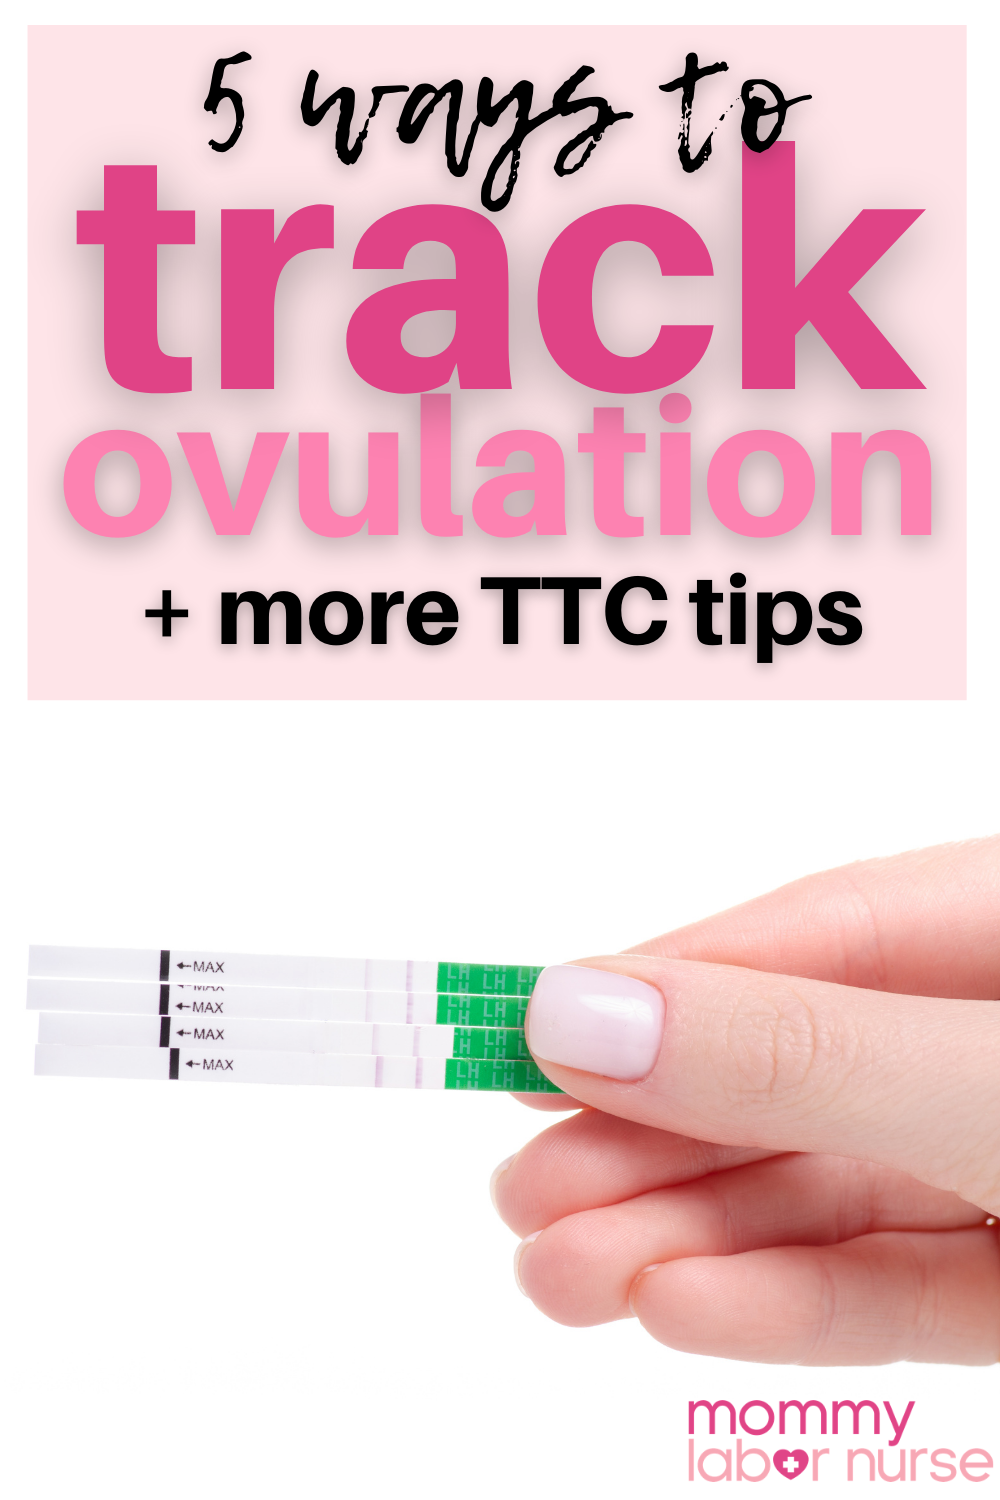 how to track ovulation, ways to track ovulation, TTC tips, OPKs, ovulation predictor kits, ovulation test strips